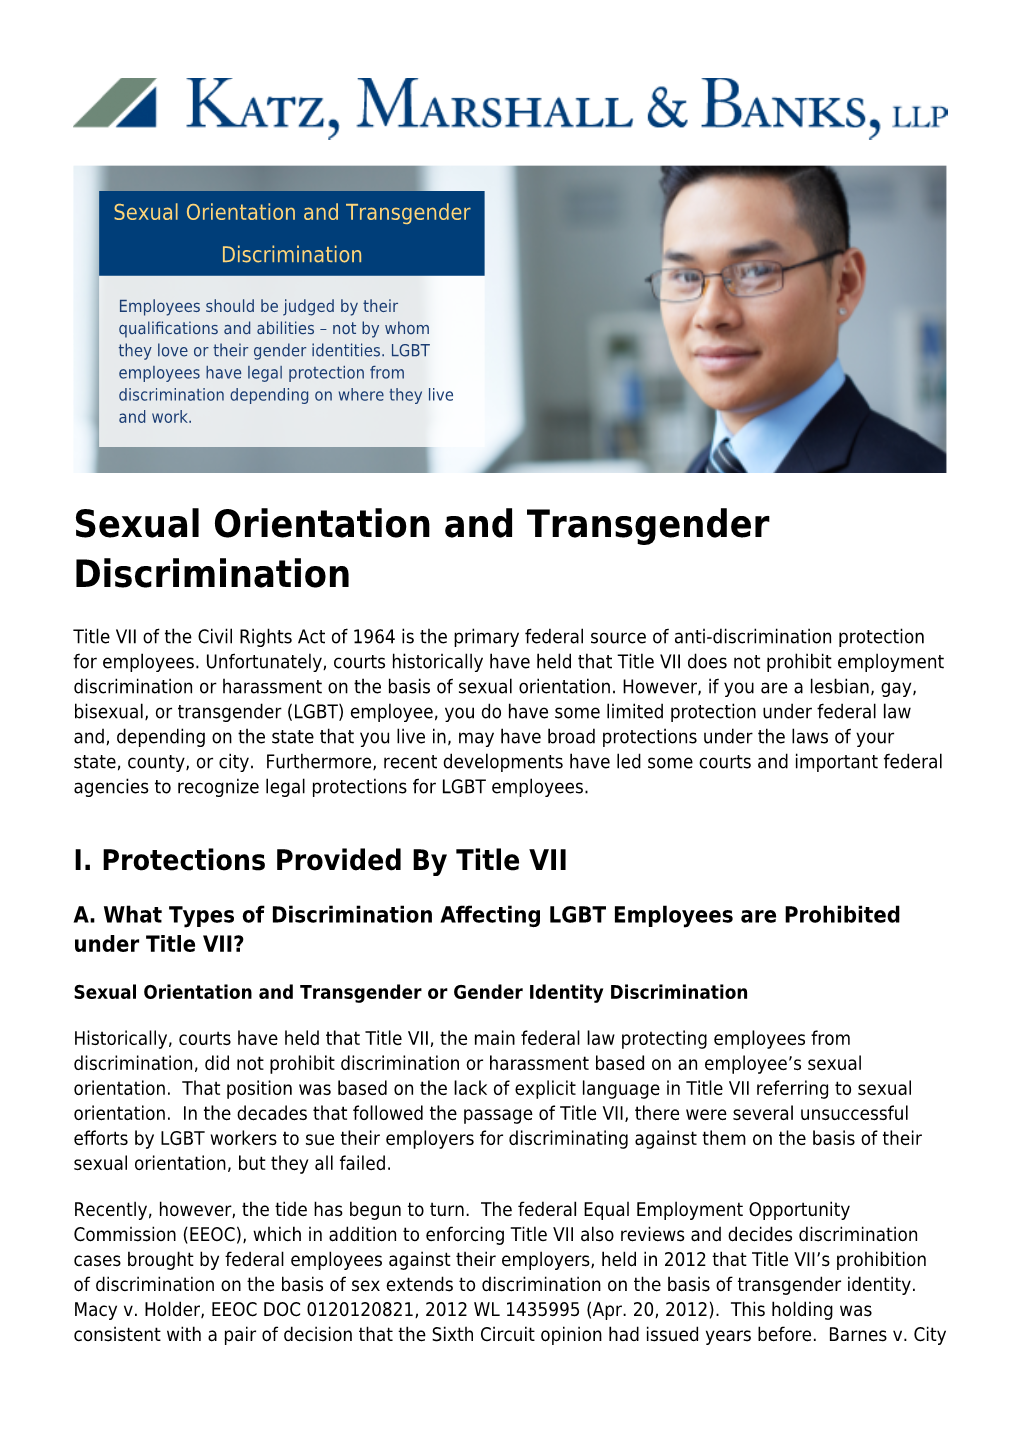 Sexual Orientation and Transgender Discrimination